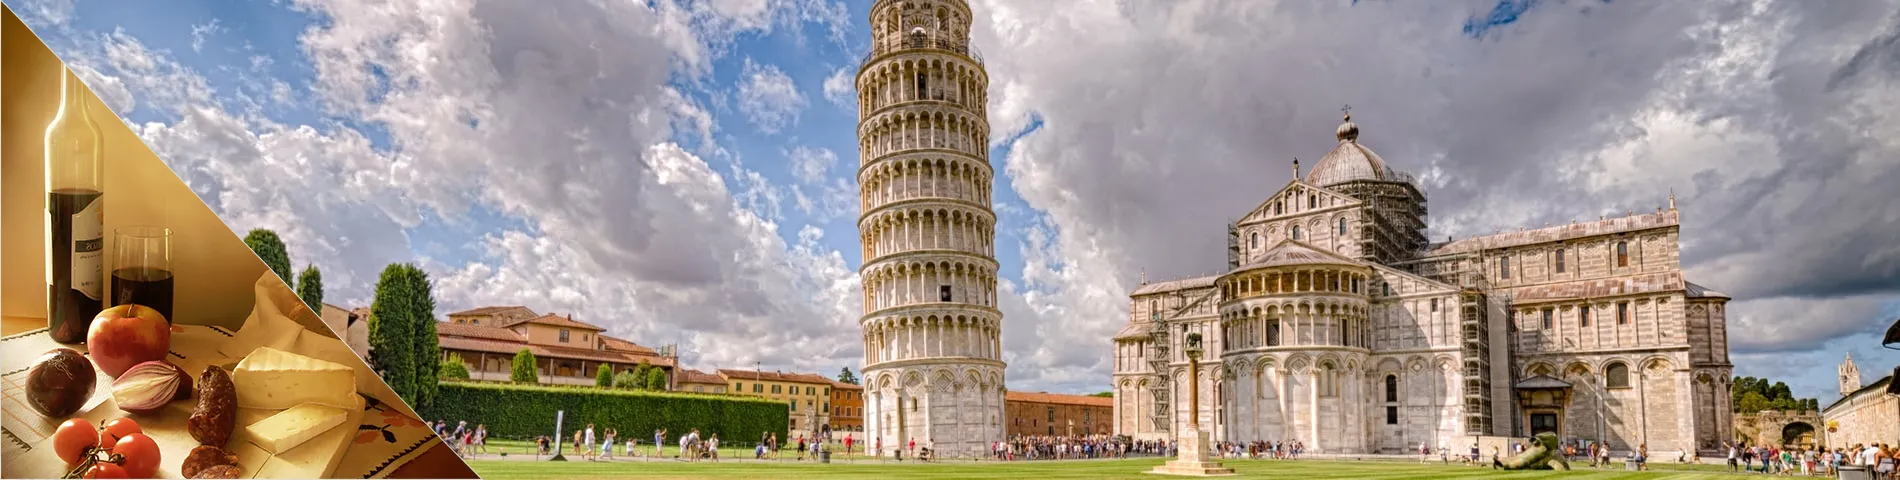 Pisa - İtalyanca & Kültür